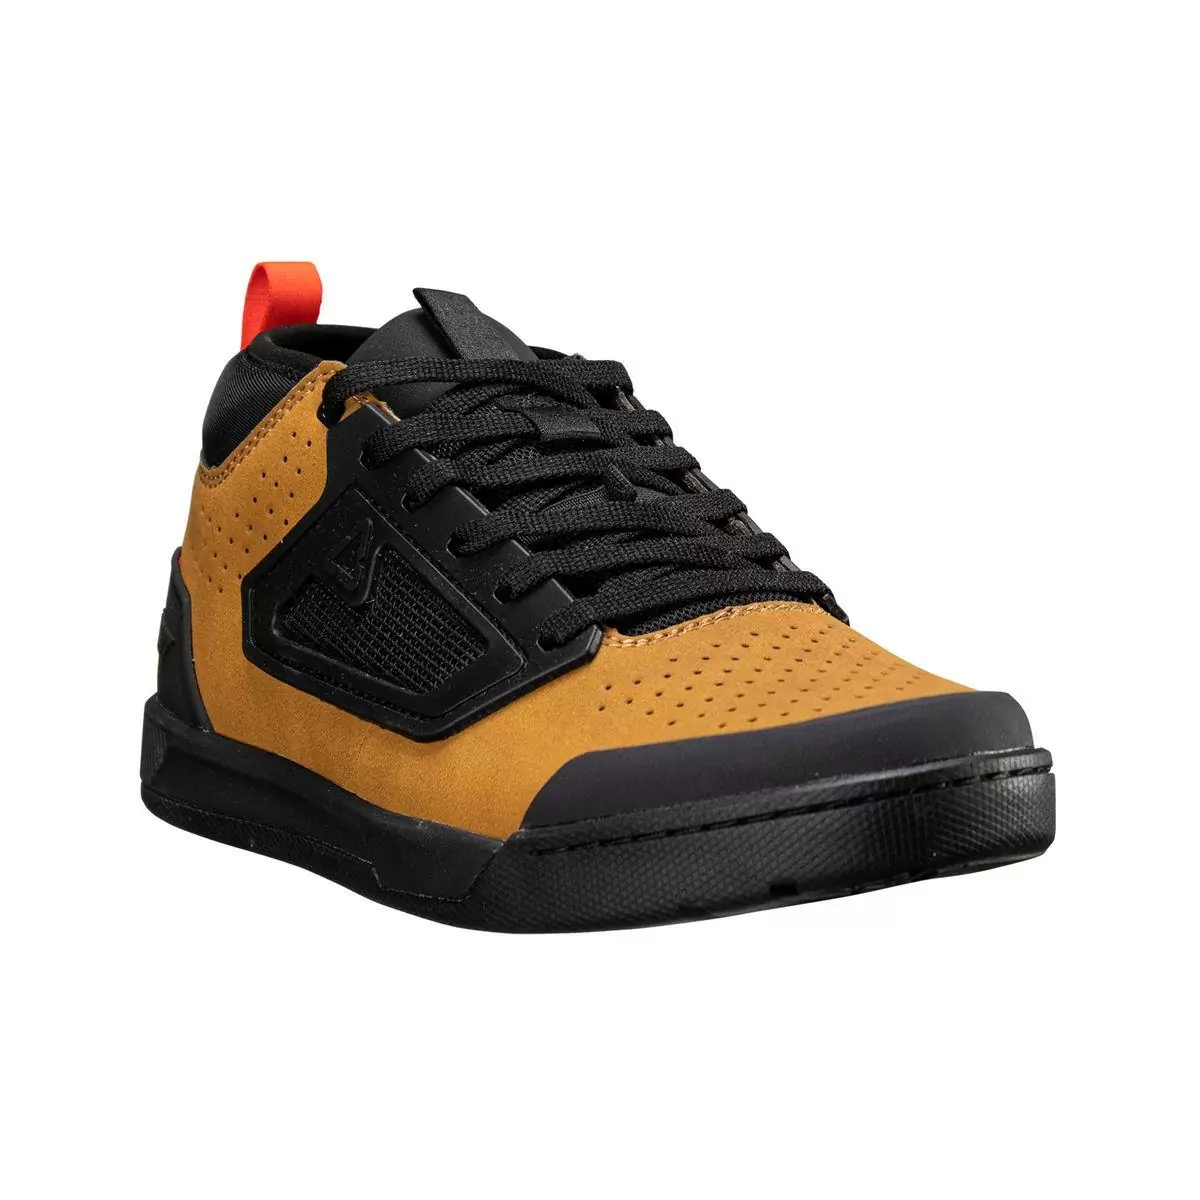 Chaussures VTT Flat 3.0 marron/noir taille 38,5 - image